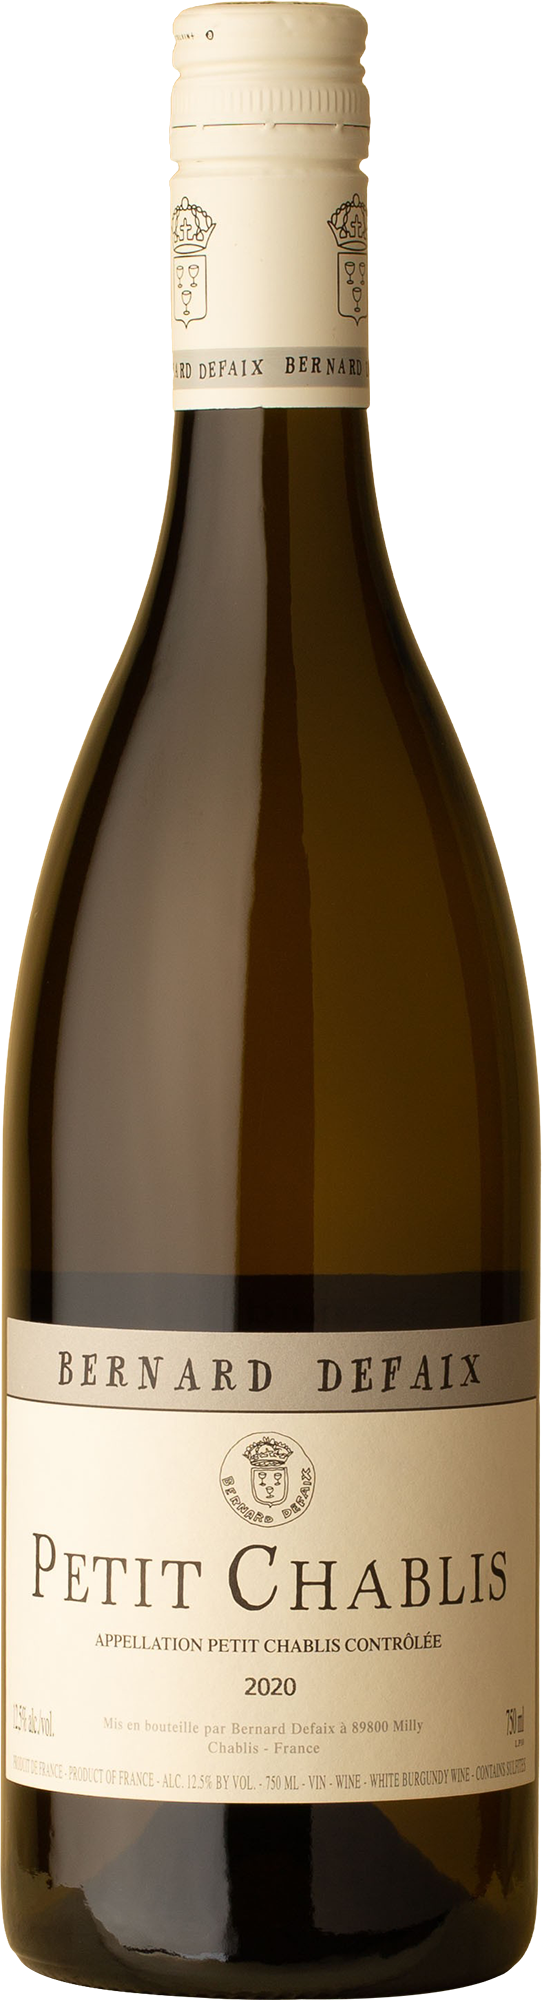 Bernard Defaix - Petit Chablis Chardonnay 2020